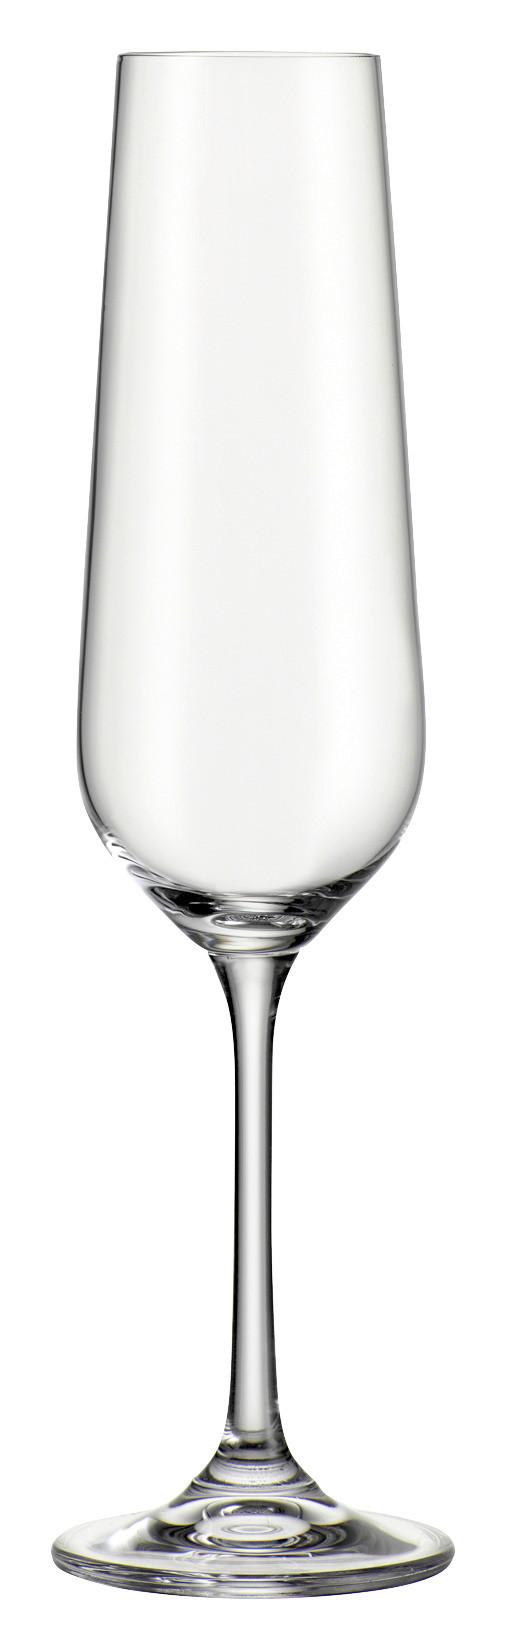 Sektglas Norma ca. 220ml - Klar, MODERN, Glas (0,22l) - Based